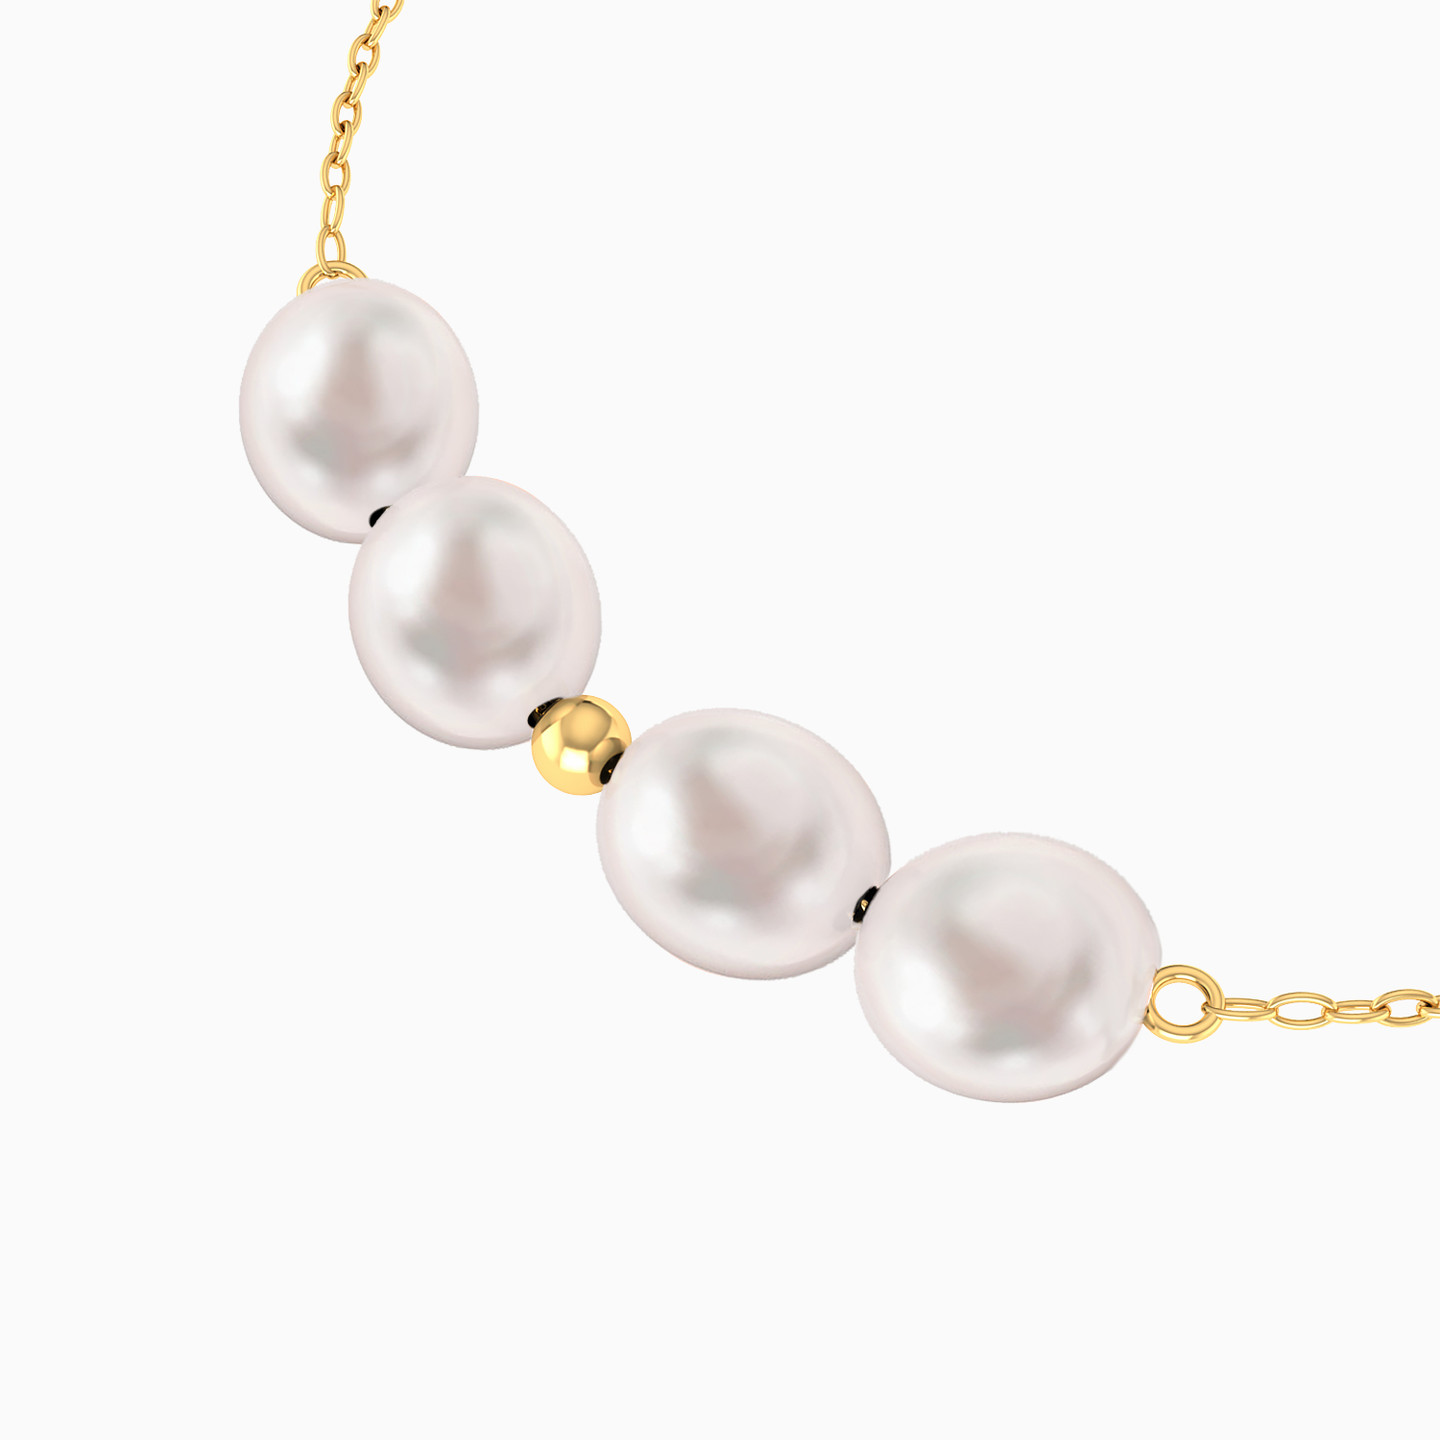 18K Gold Pearl Chain Bracelet - 3